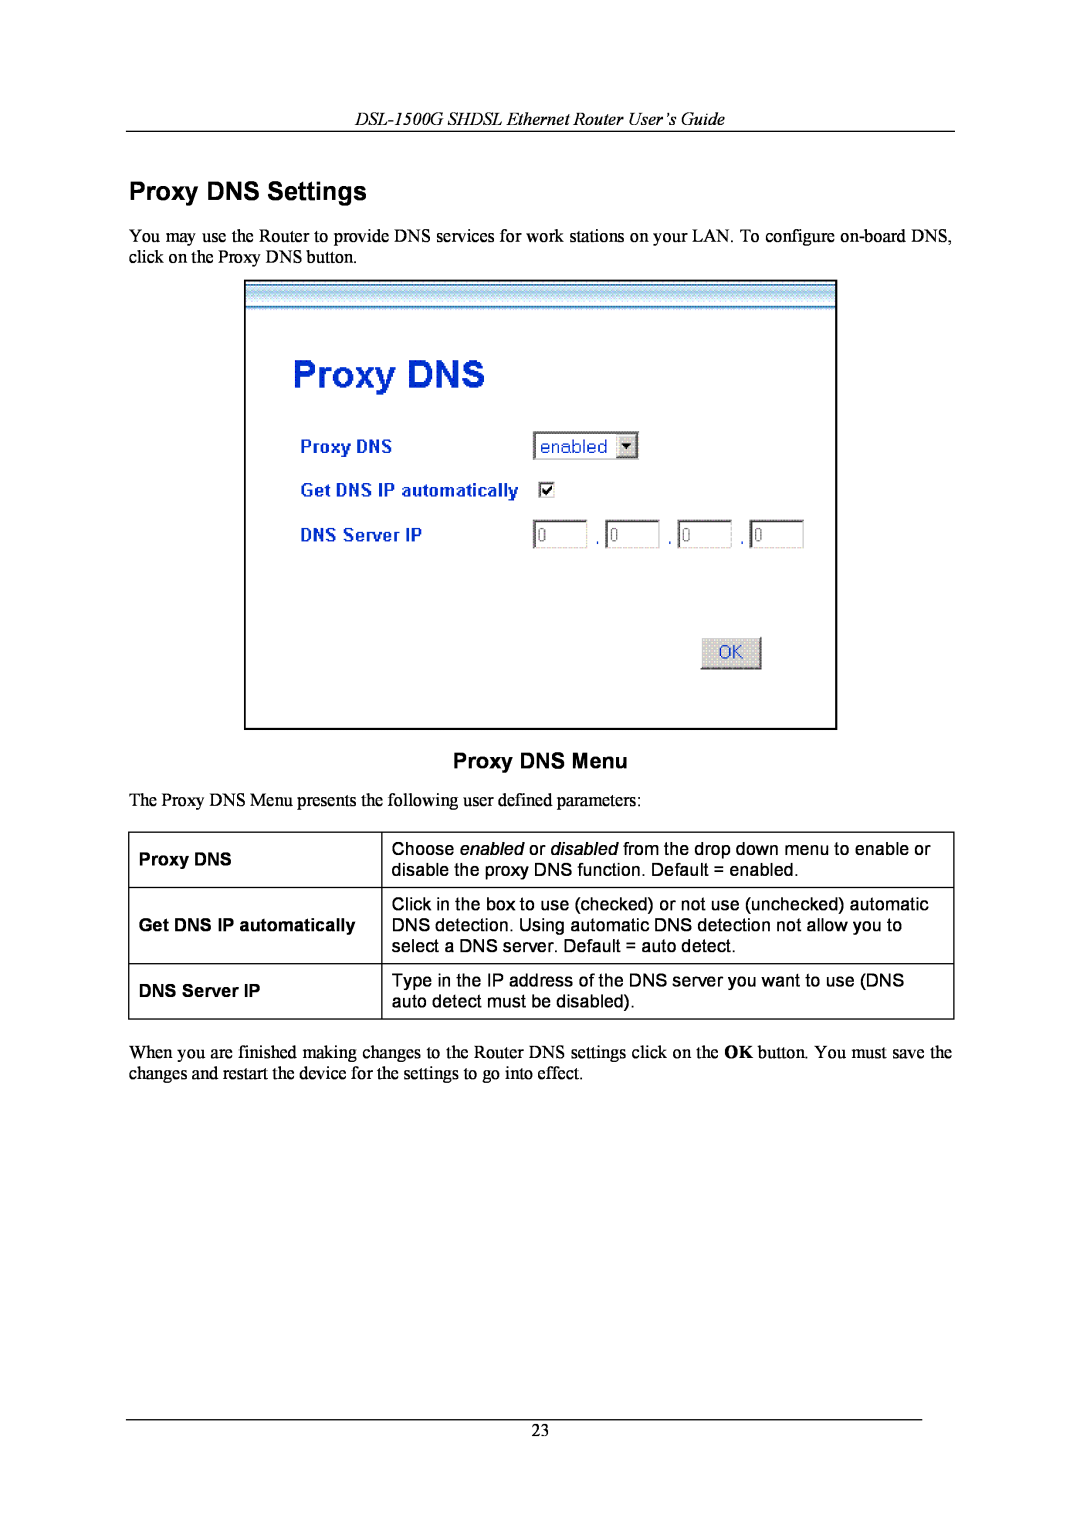 D-Link manual Proxy DNS Settings, Proxy DNS Menu, DSL-1500G SHDSL Ethernet Router User’s Guide 